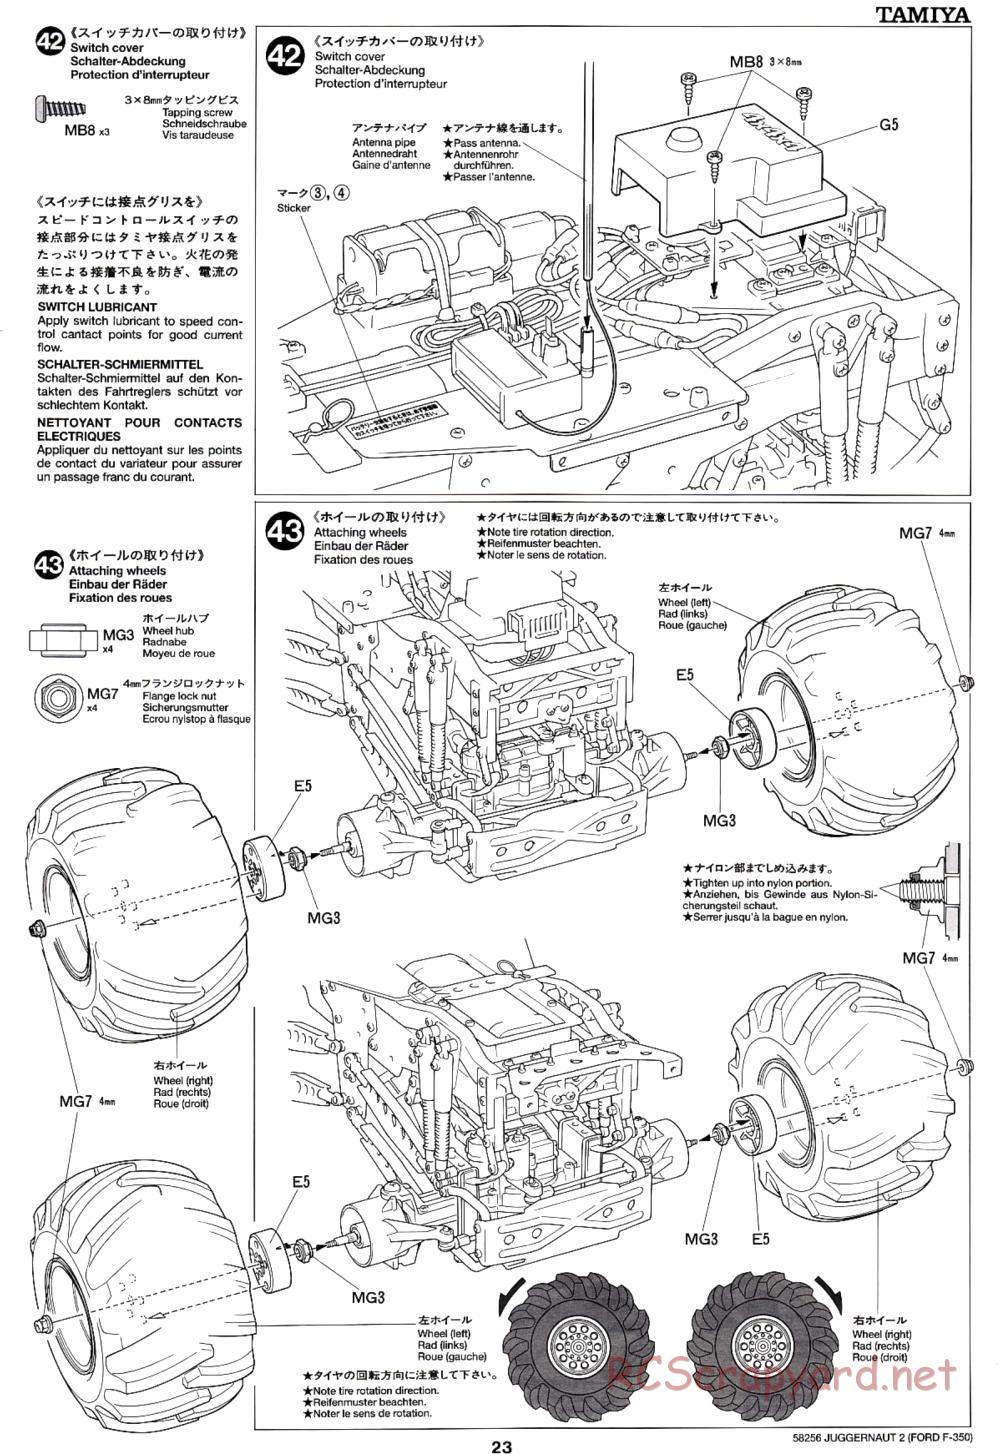 Tamiya - Juggernaut 2 Chassis - Manual - Page 23